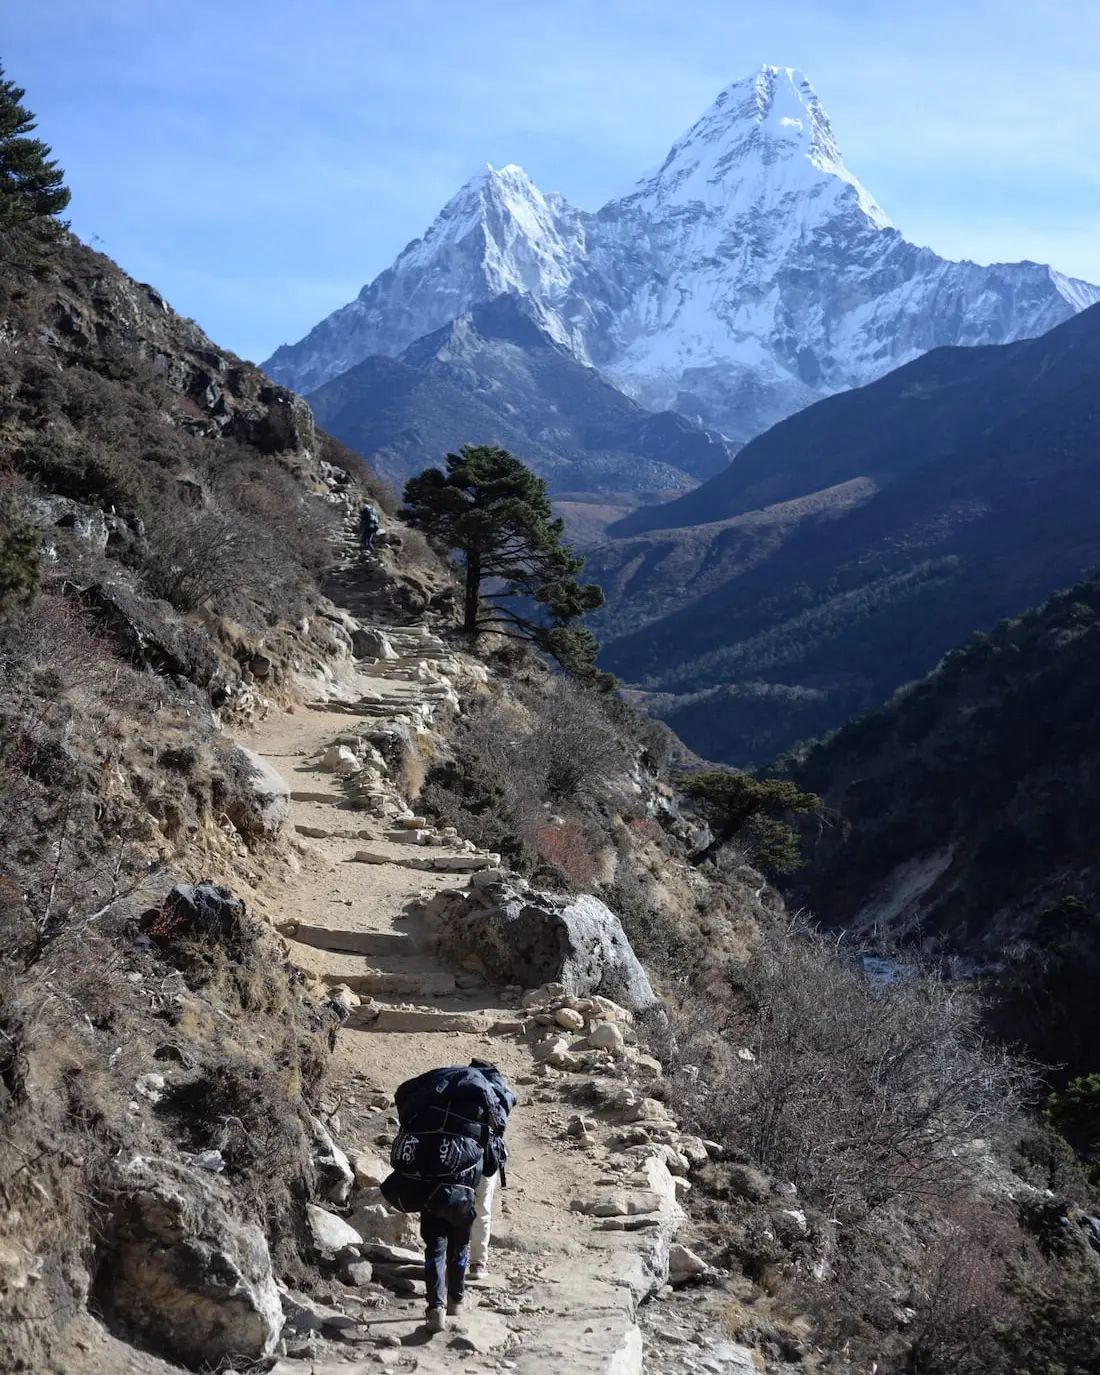 Mount Everest Base Camp packing list